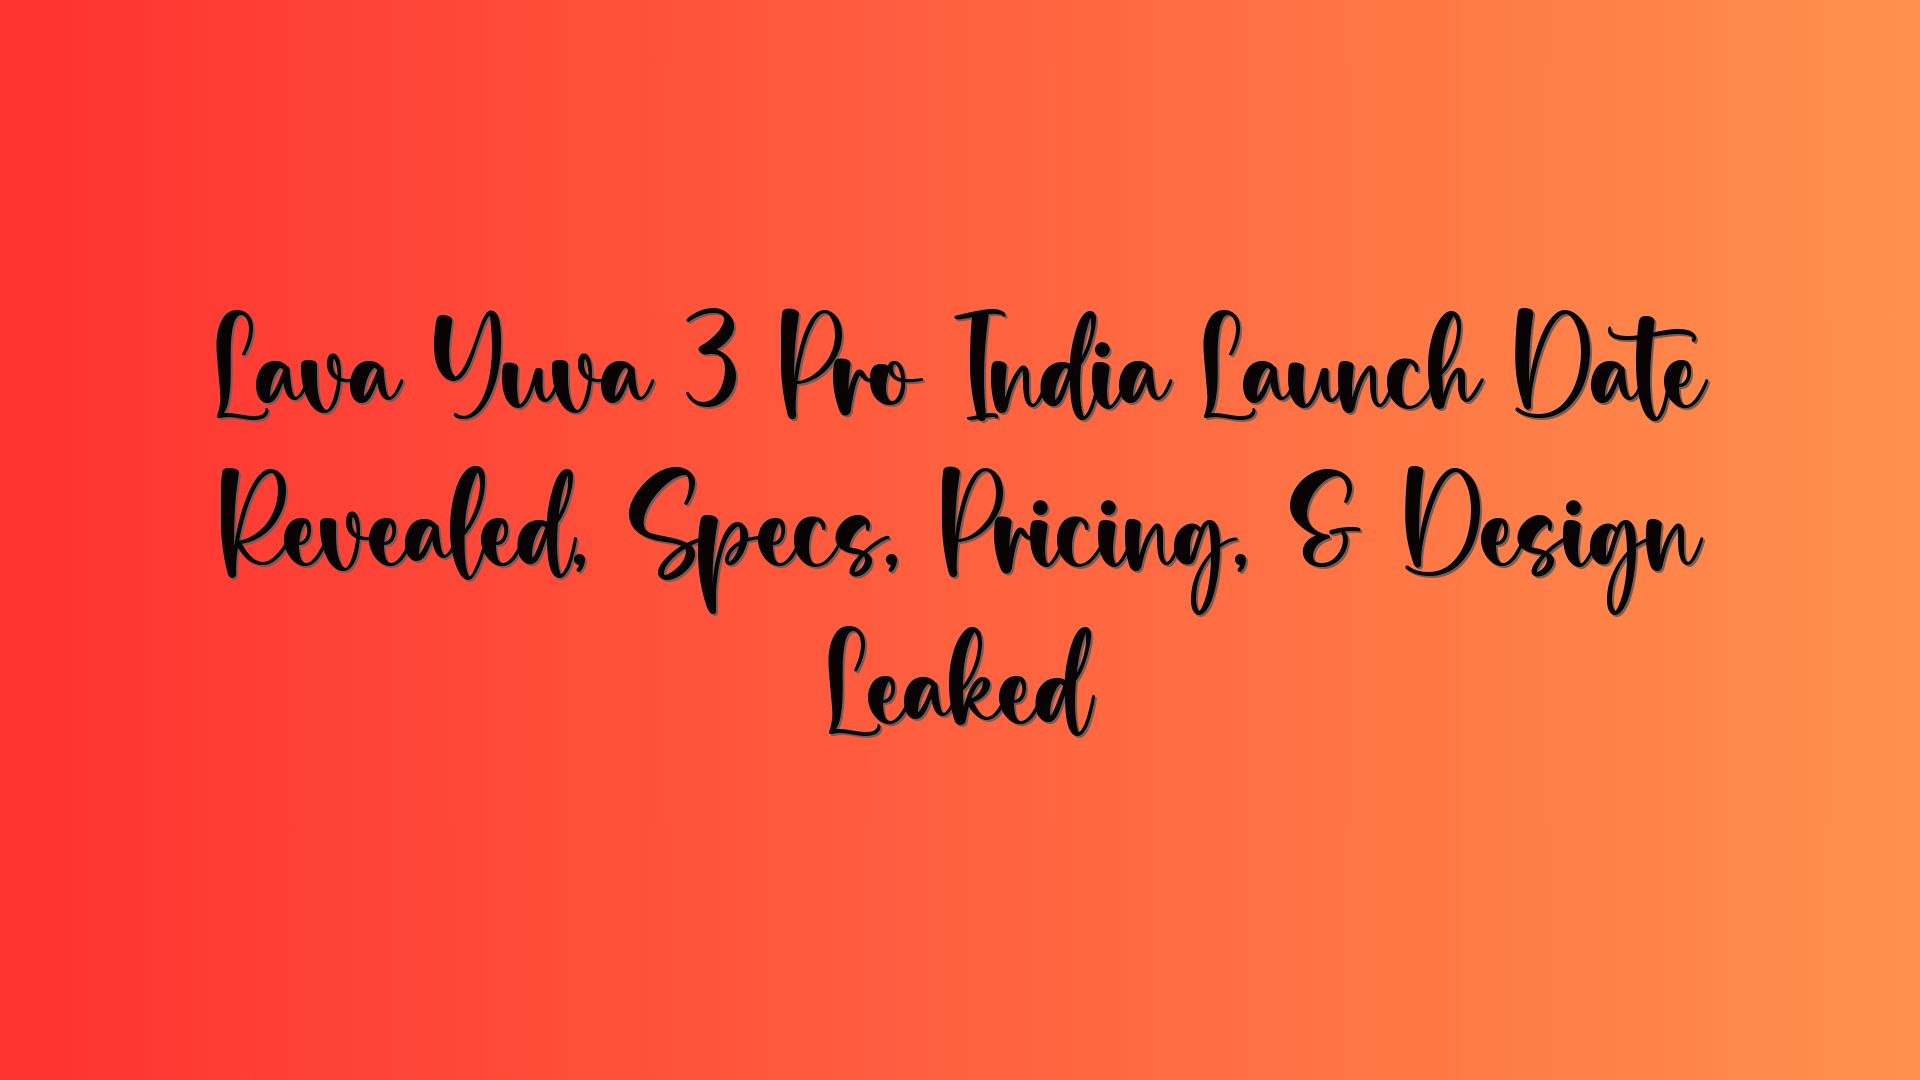 Lava Yuva 3 Pro India Launch Date Revealed, Specs, Pricing, & Design Leaked